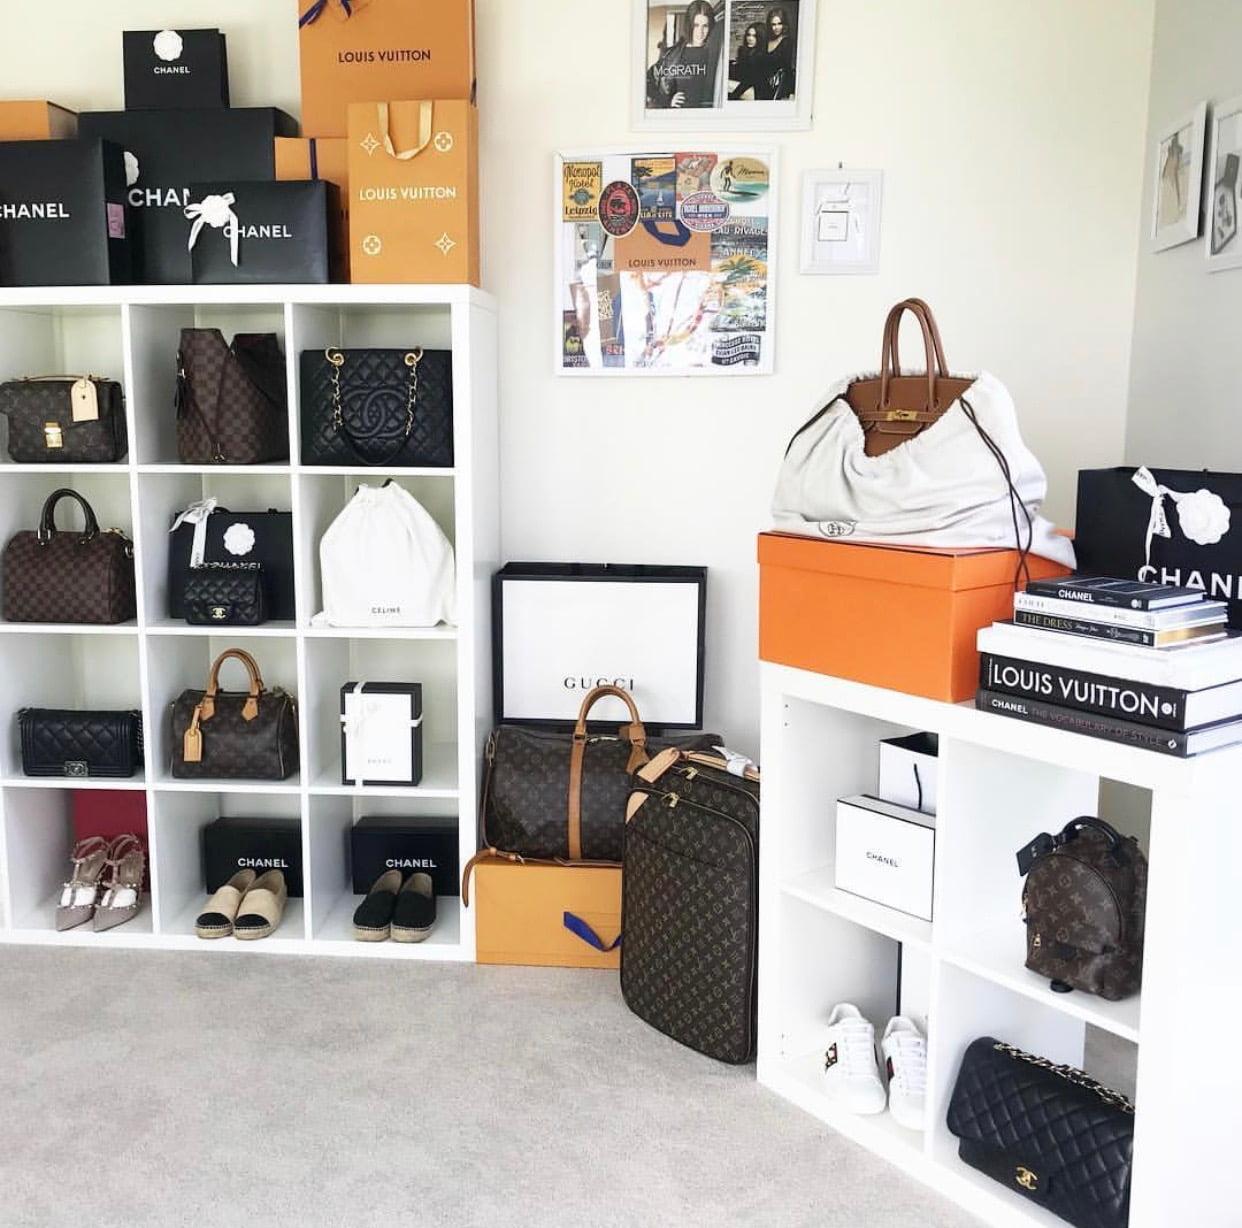 Rent Burberry Luxury Handbags - Bag Borrow Or Steal